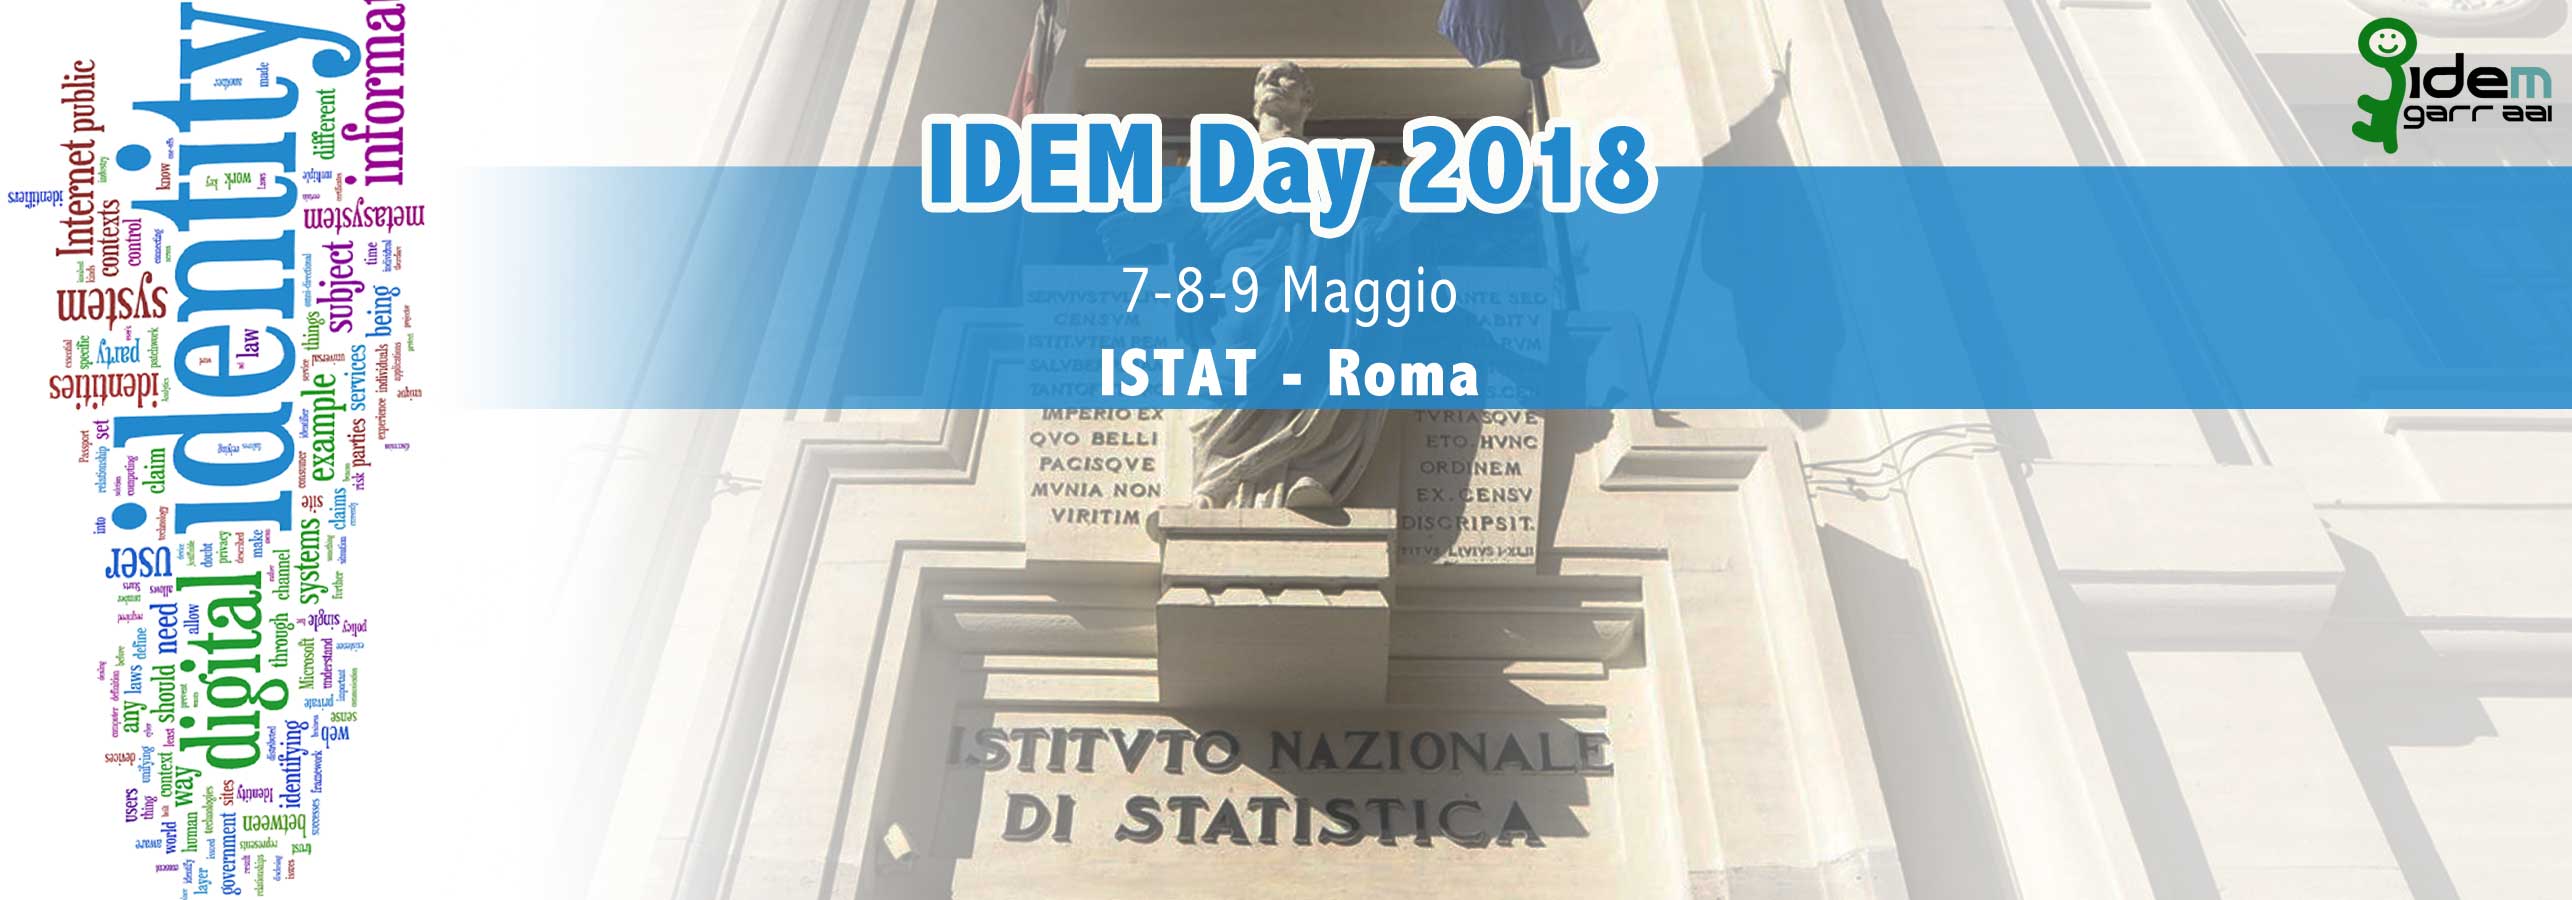 IDEM Day 2018